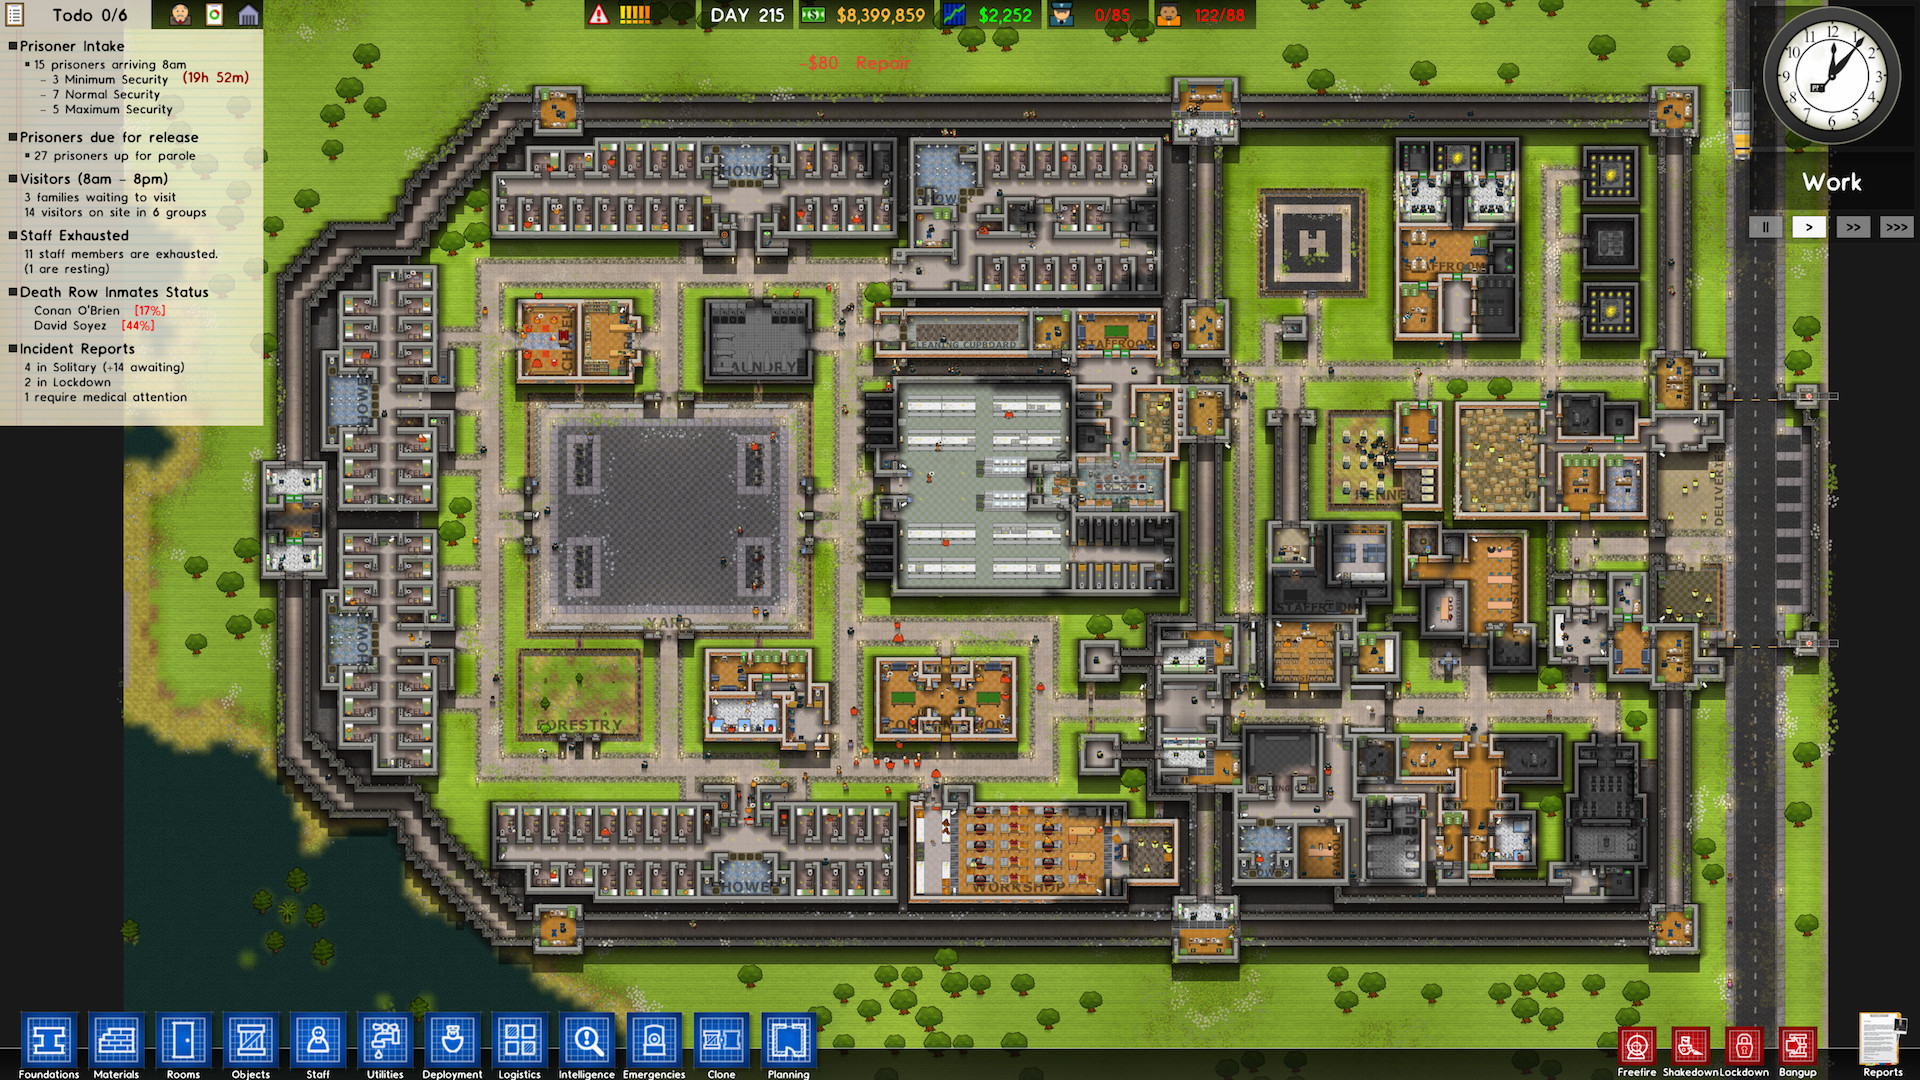 Save 20% on Prison Life 2 on Steam